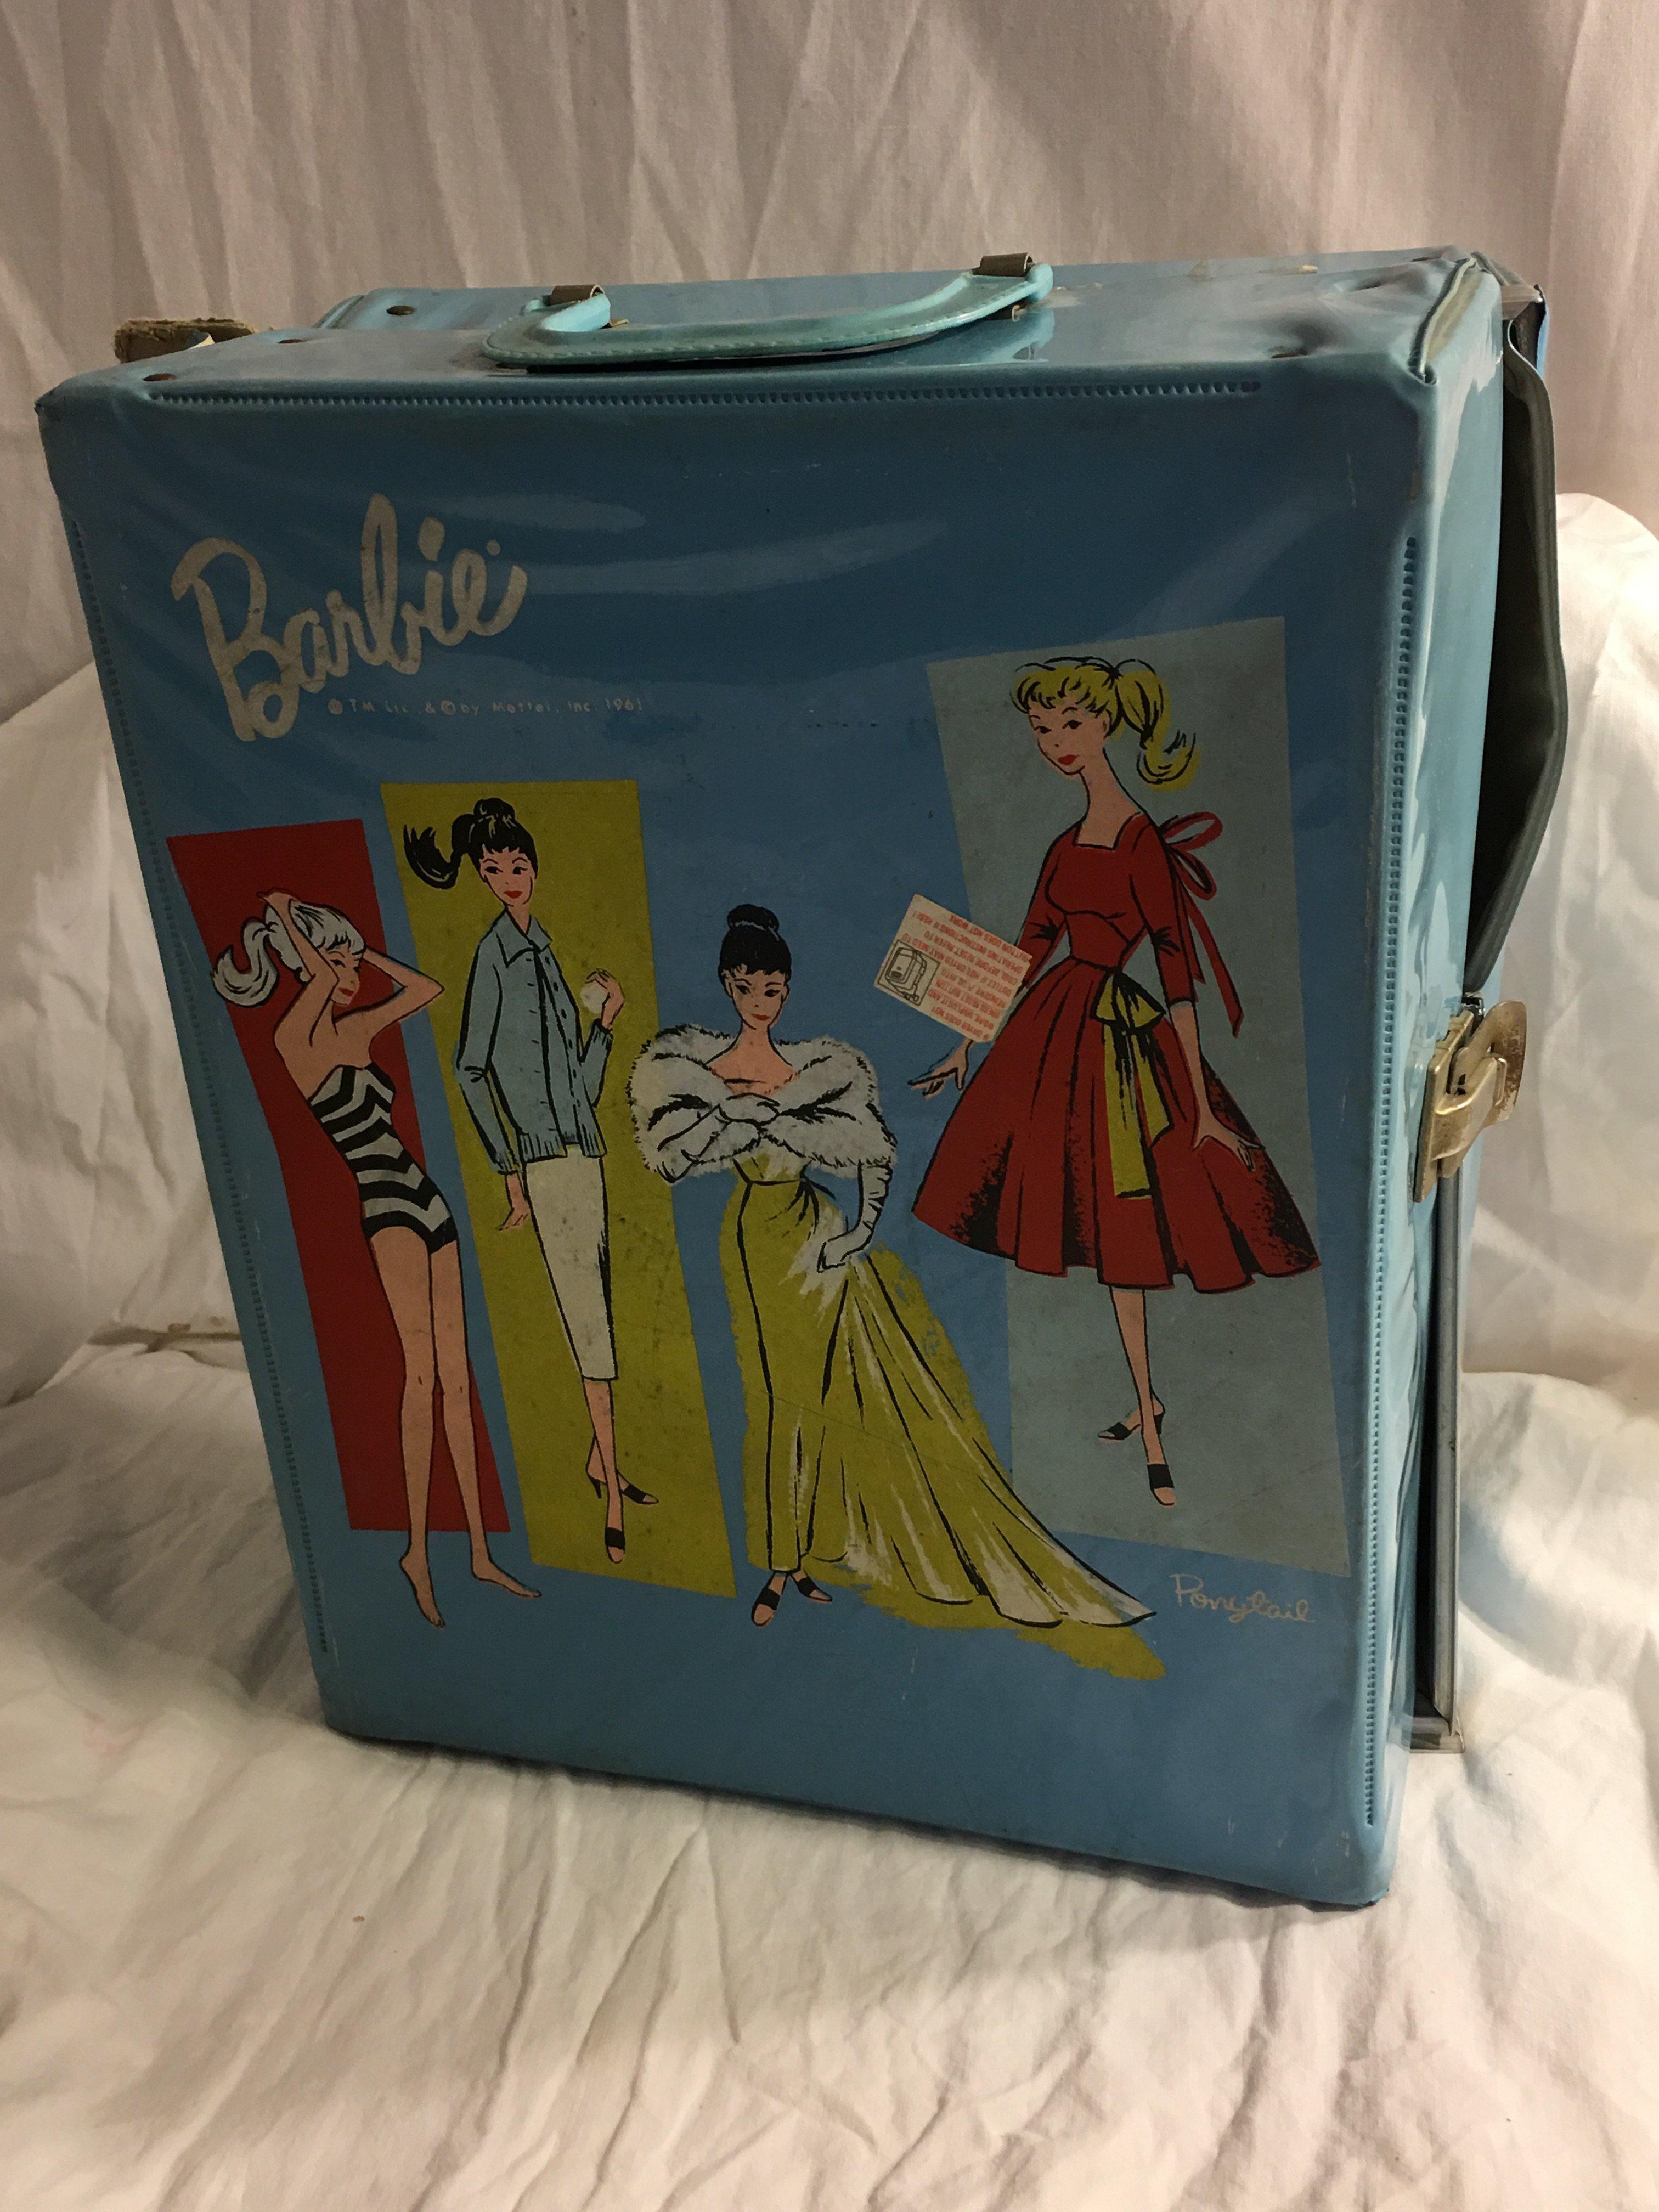 Collector Vintage Barbie Doll Case Ponytail Light Blue Color With Clothes Has Damage Size:13"x11"